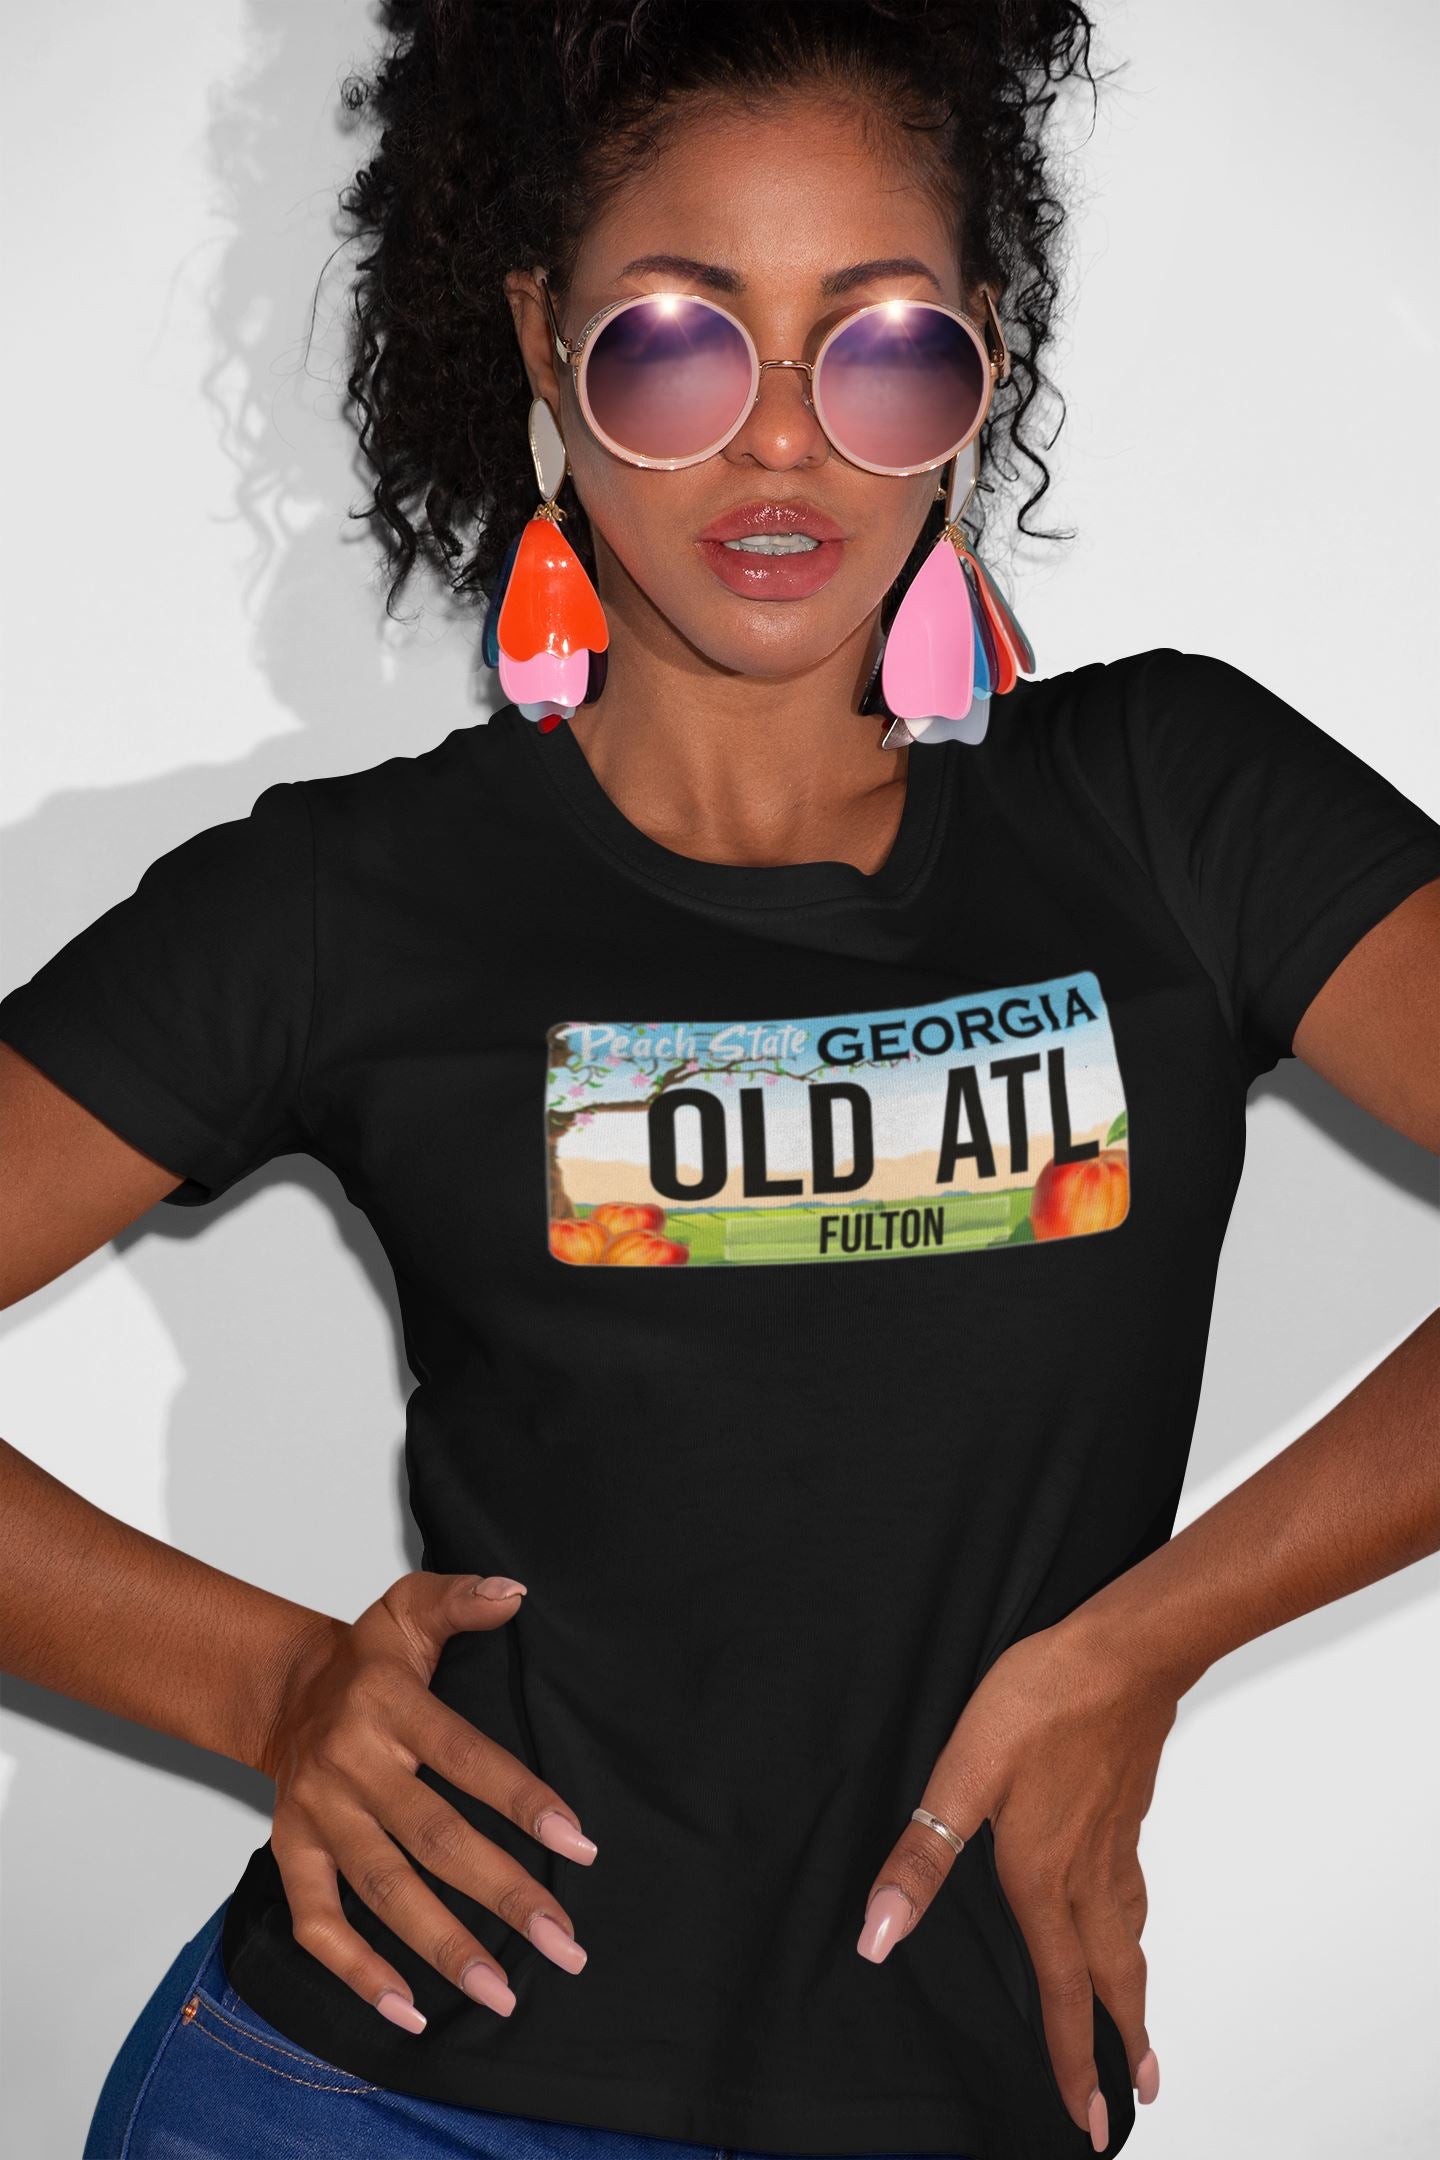 Old ATL Peach State T-Shirt, Georgia Girl, License Plate Themed Shirt Shirt B1ack By Design LLC 